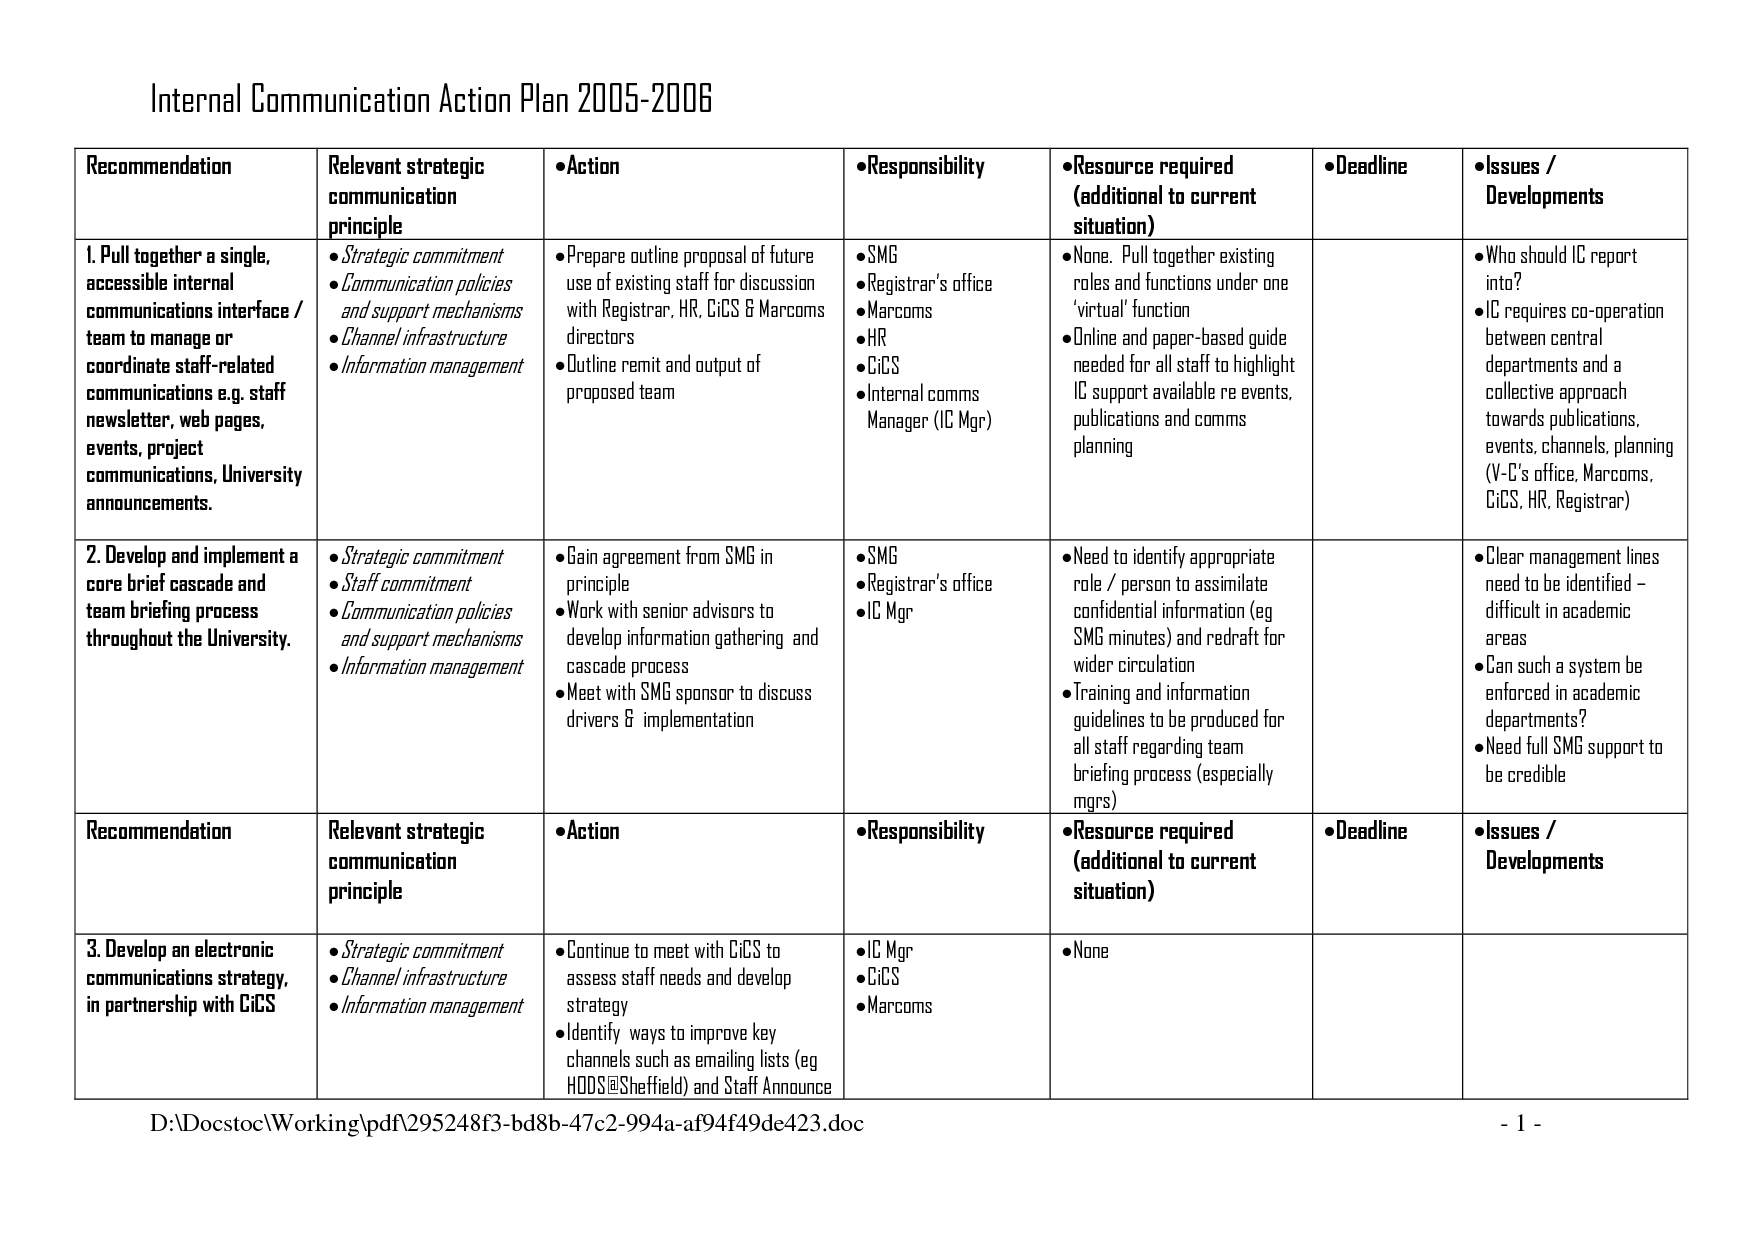 Internal Communications Plan Template | Professional Template